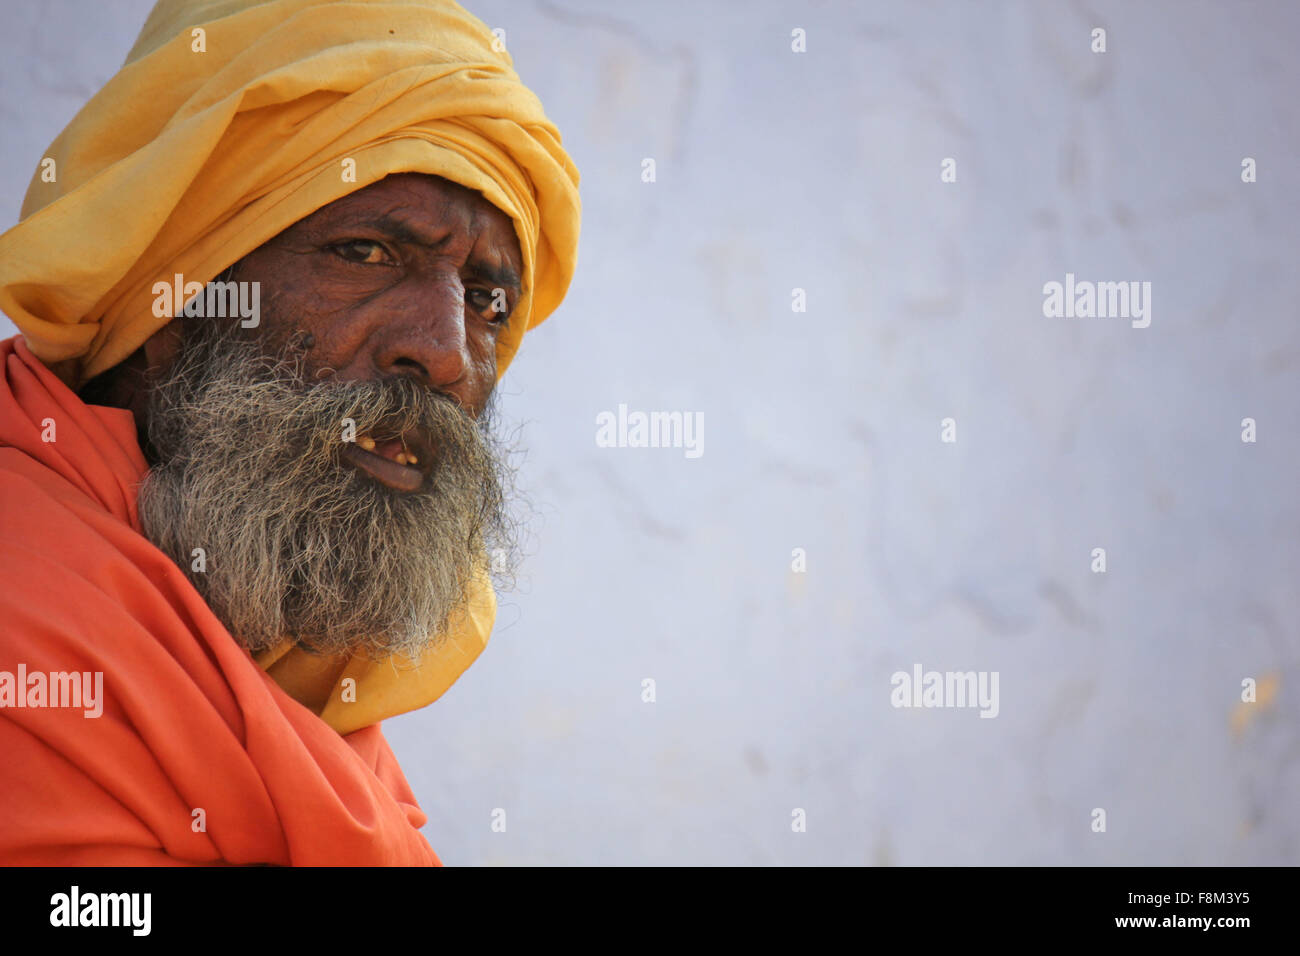 Pushkar, India, November 28, 2012: Senior Indian Man with orange turban Stock Photo